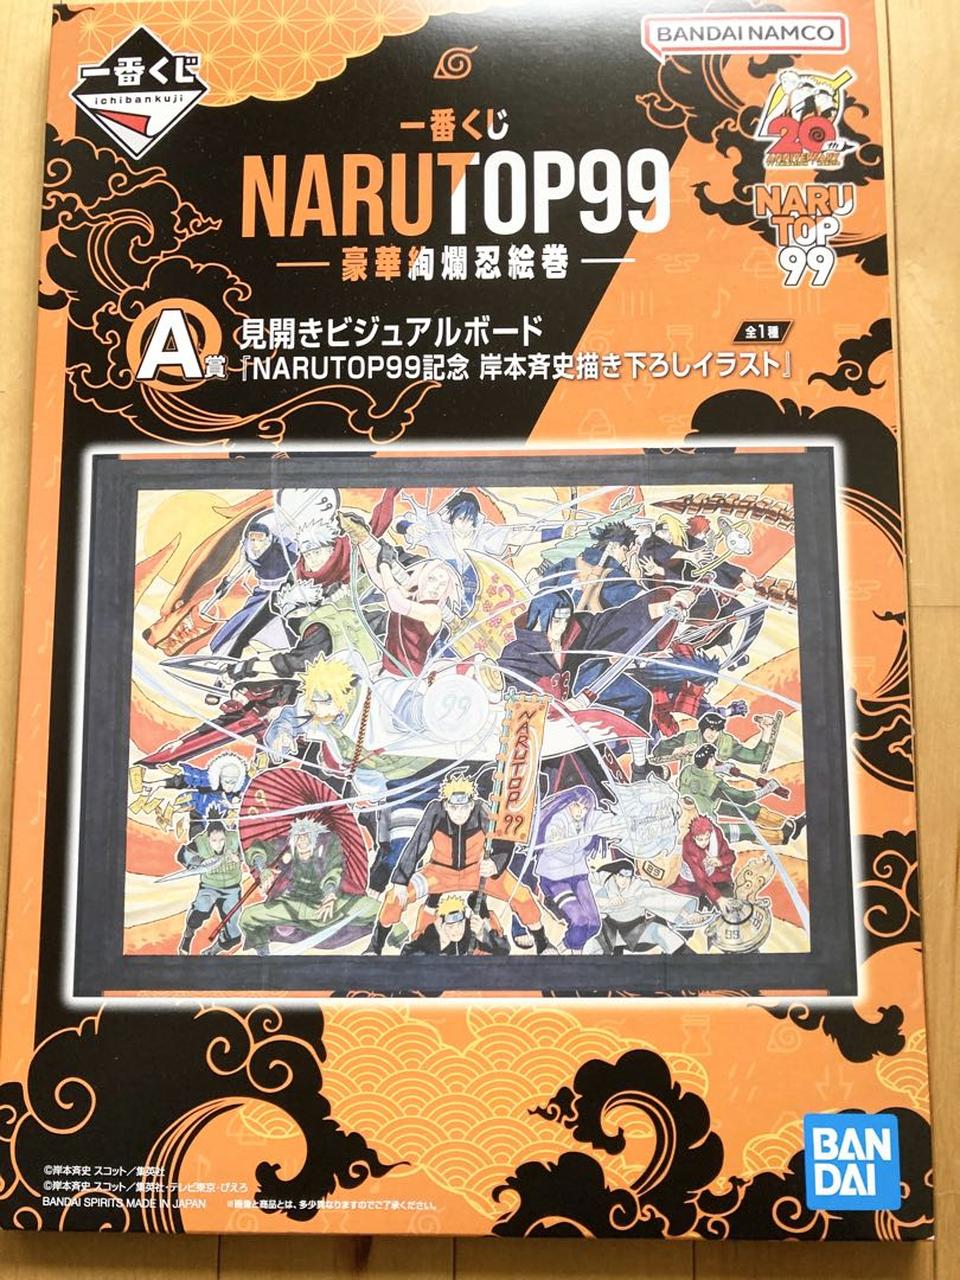 Ichiban Kuji NARUTOP99 A Prize Spread Visual Board Buy